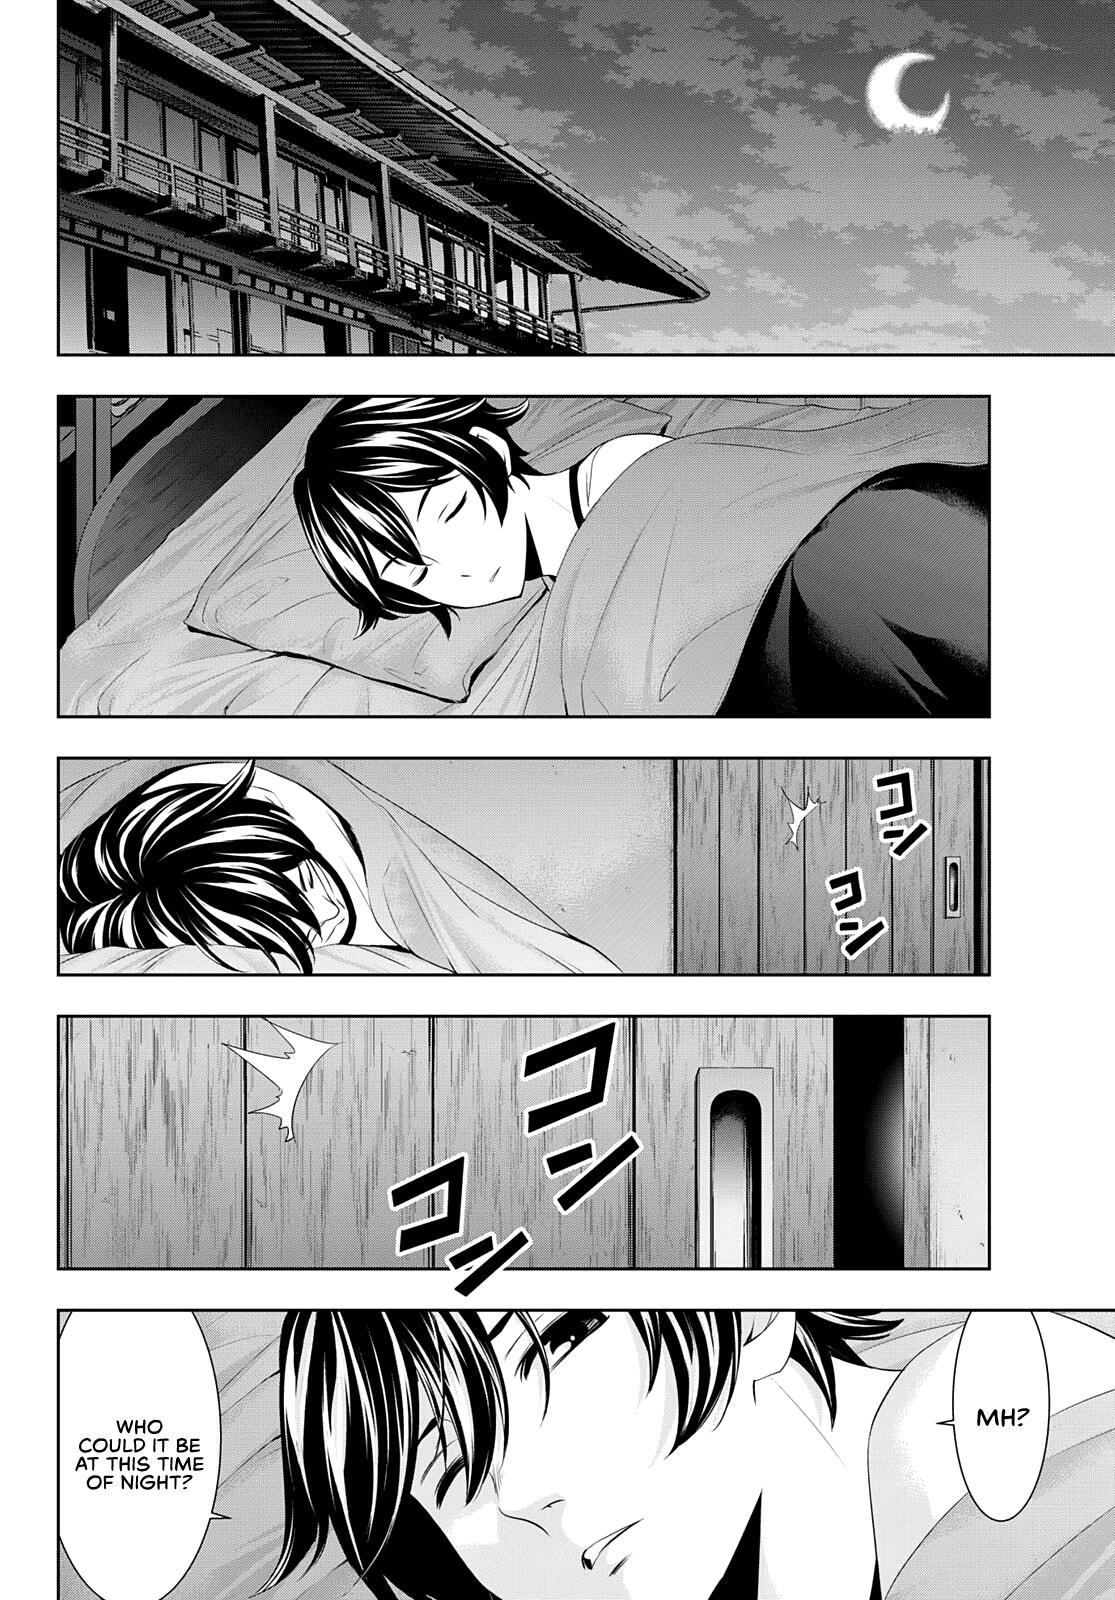 Megami no cafe terrace capítulo 119 — Manga en línea